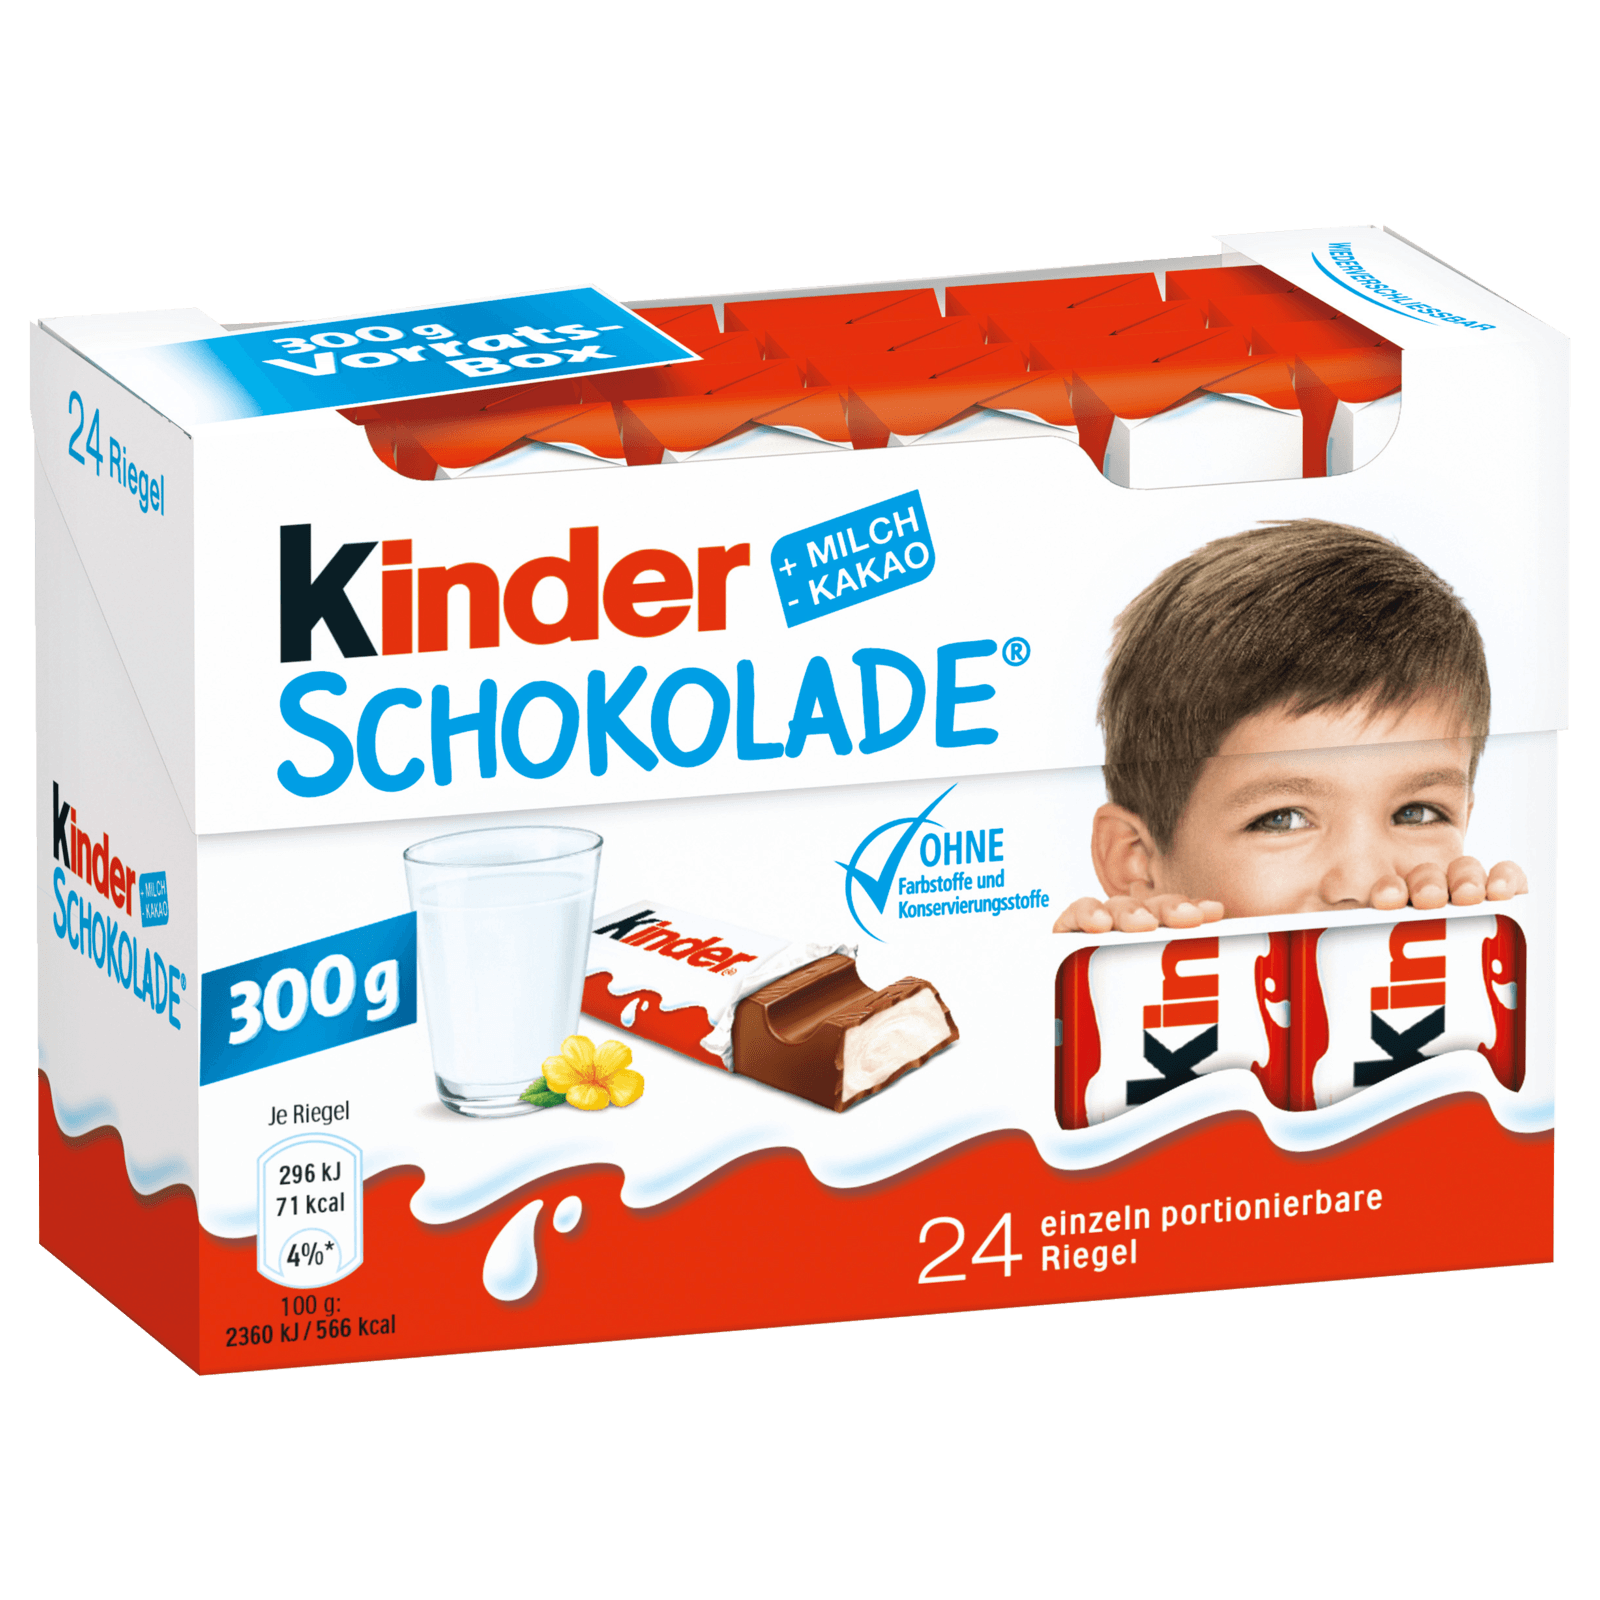 Фф kinder. Киндер шоколад. Kinder шоколад. Мальчик с Киндер шоколада. Продукты Киндер.